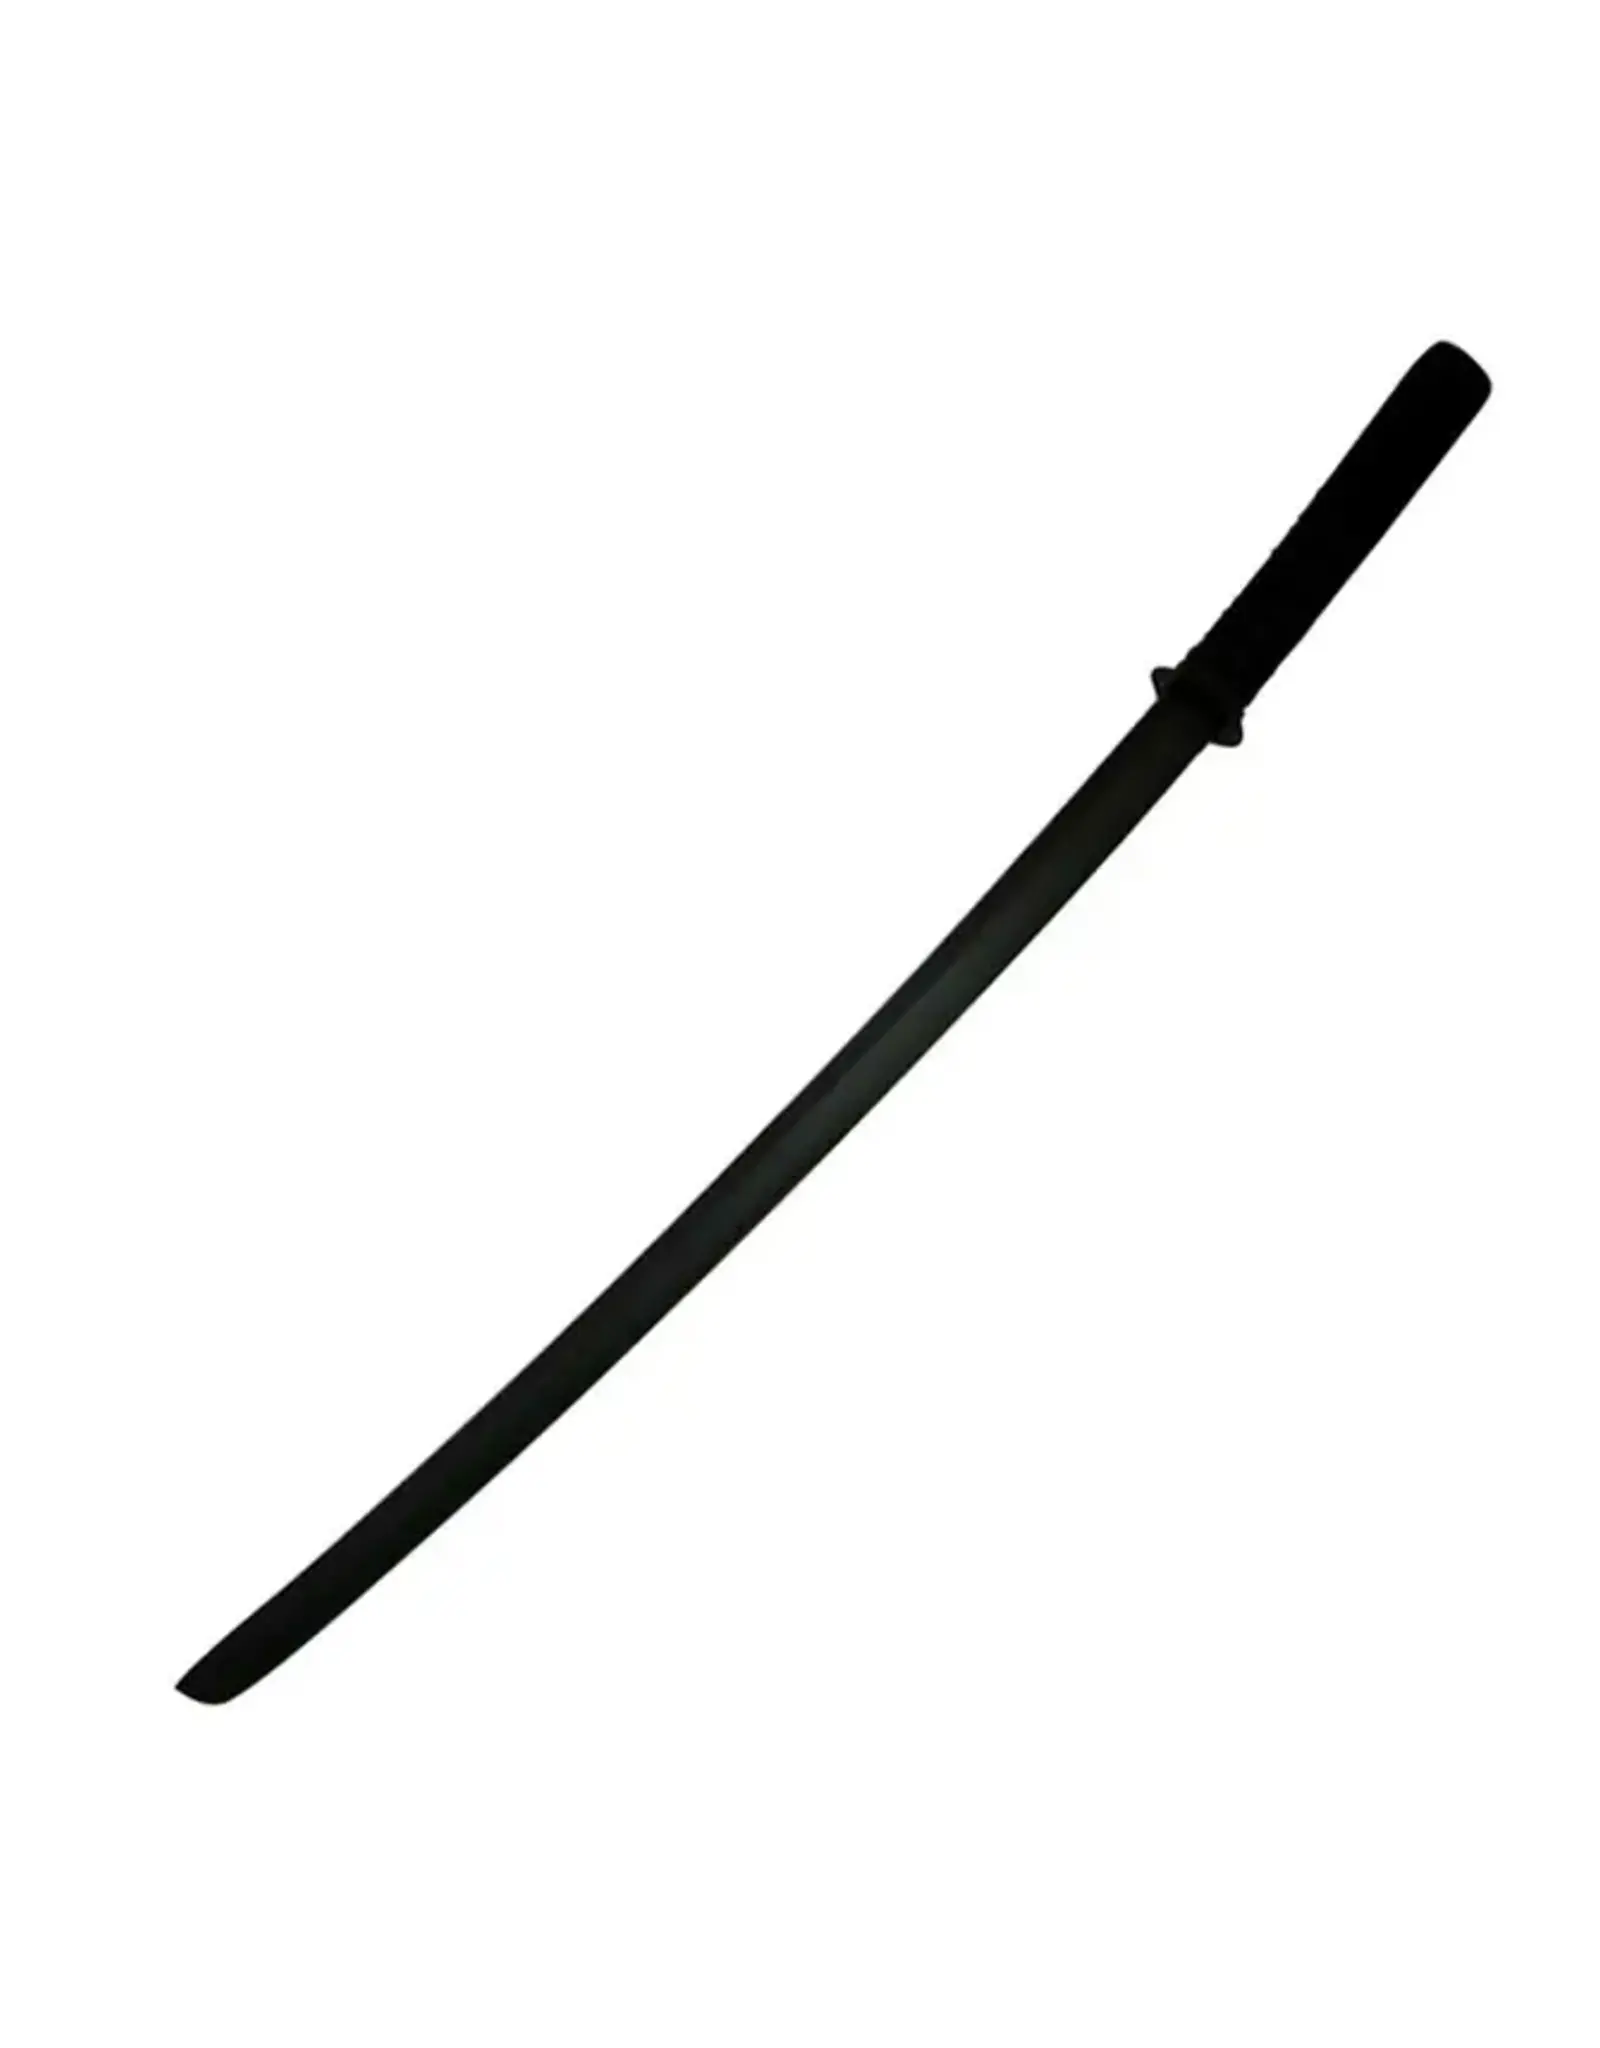 BladesUSA - Martial Arts Training Equipment - Samurai Wooden Training Sword - 1806BK